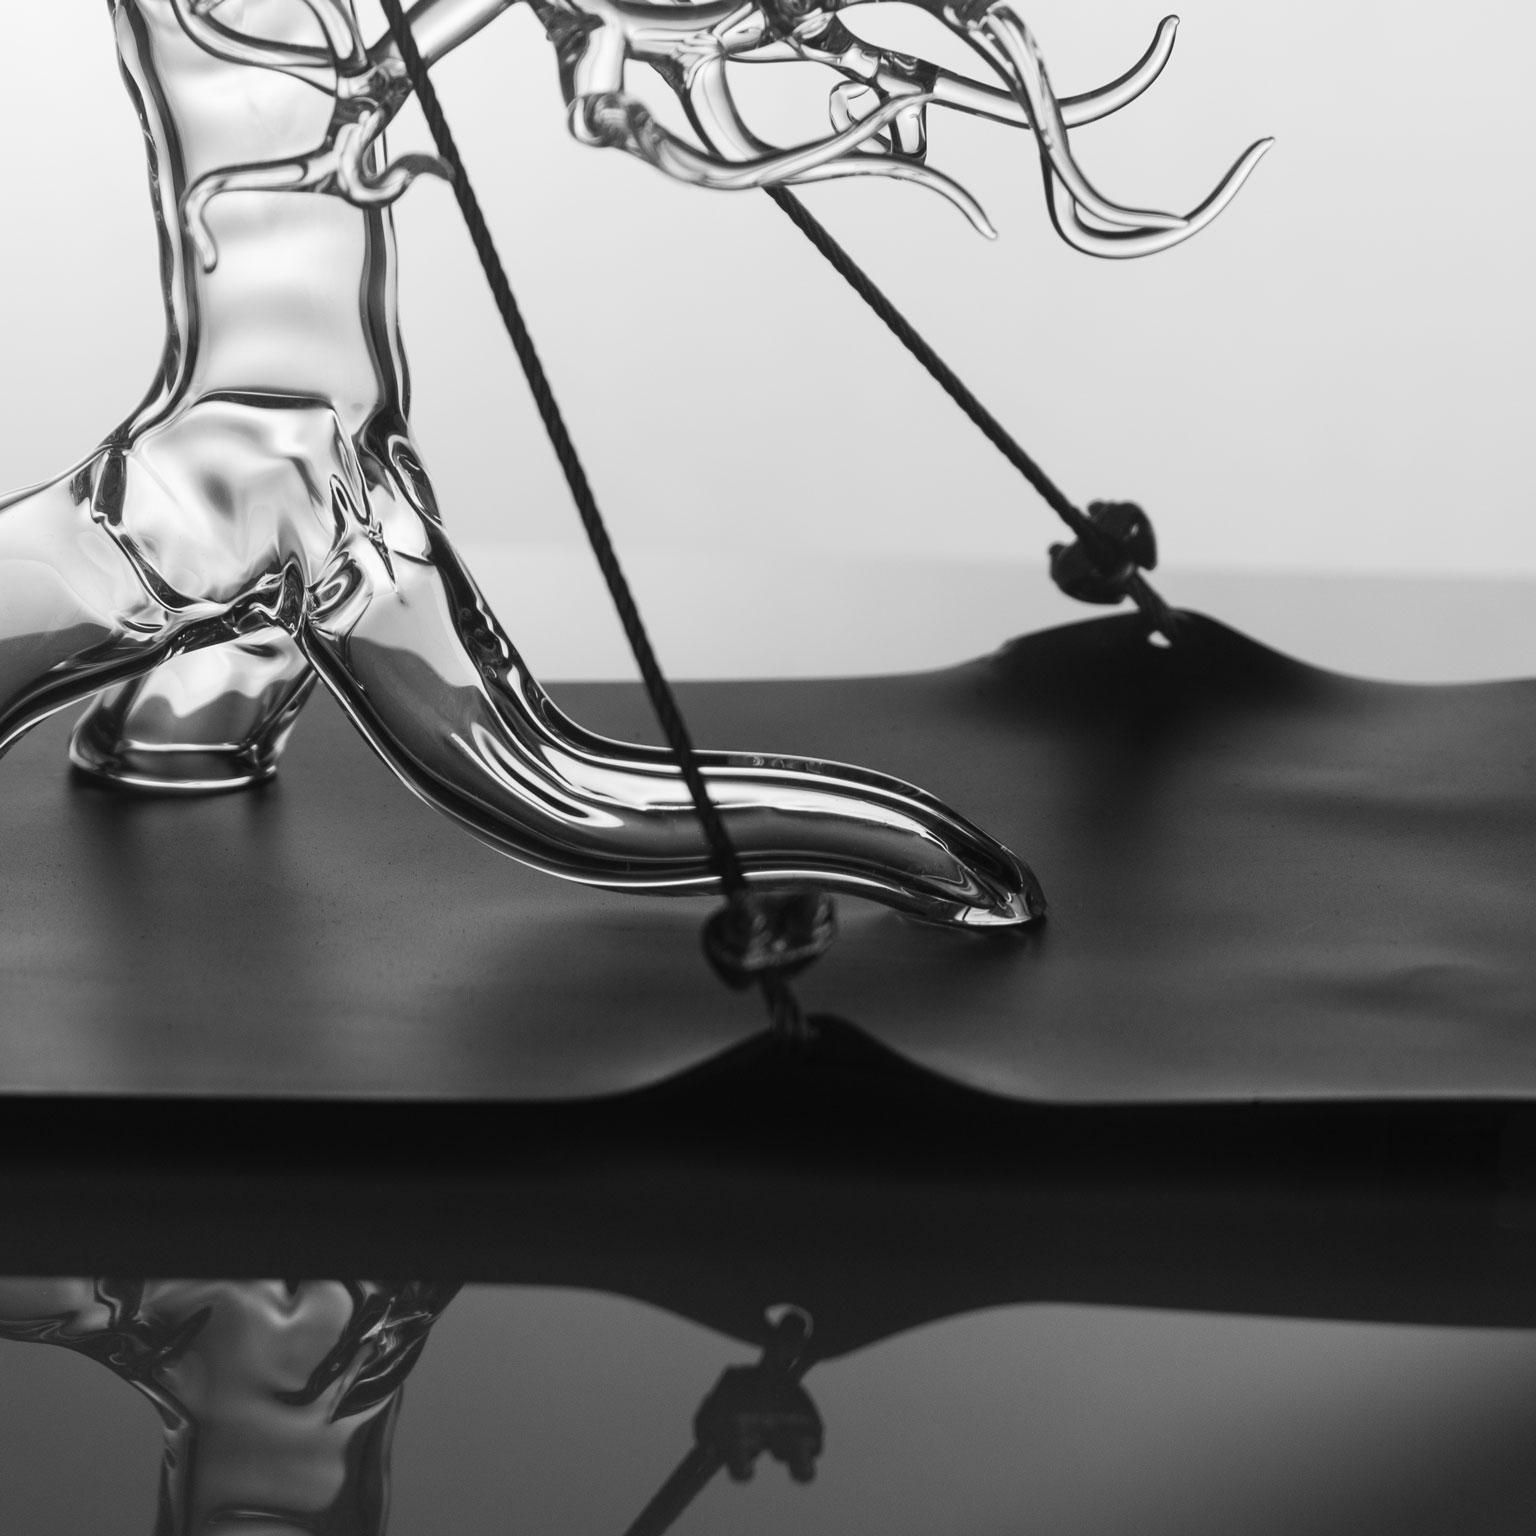 Italian Contemporary Tensione Estetica Hand-Blown Glass and Metal Sculpture For Sale